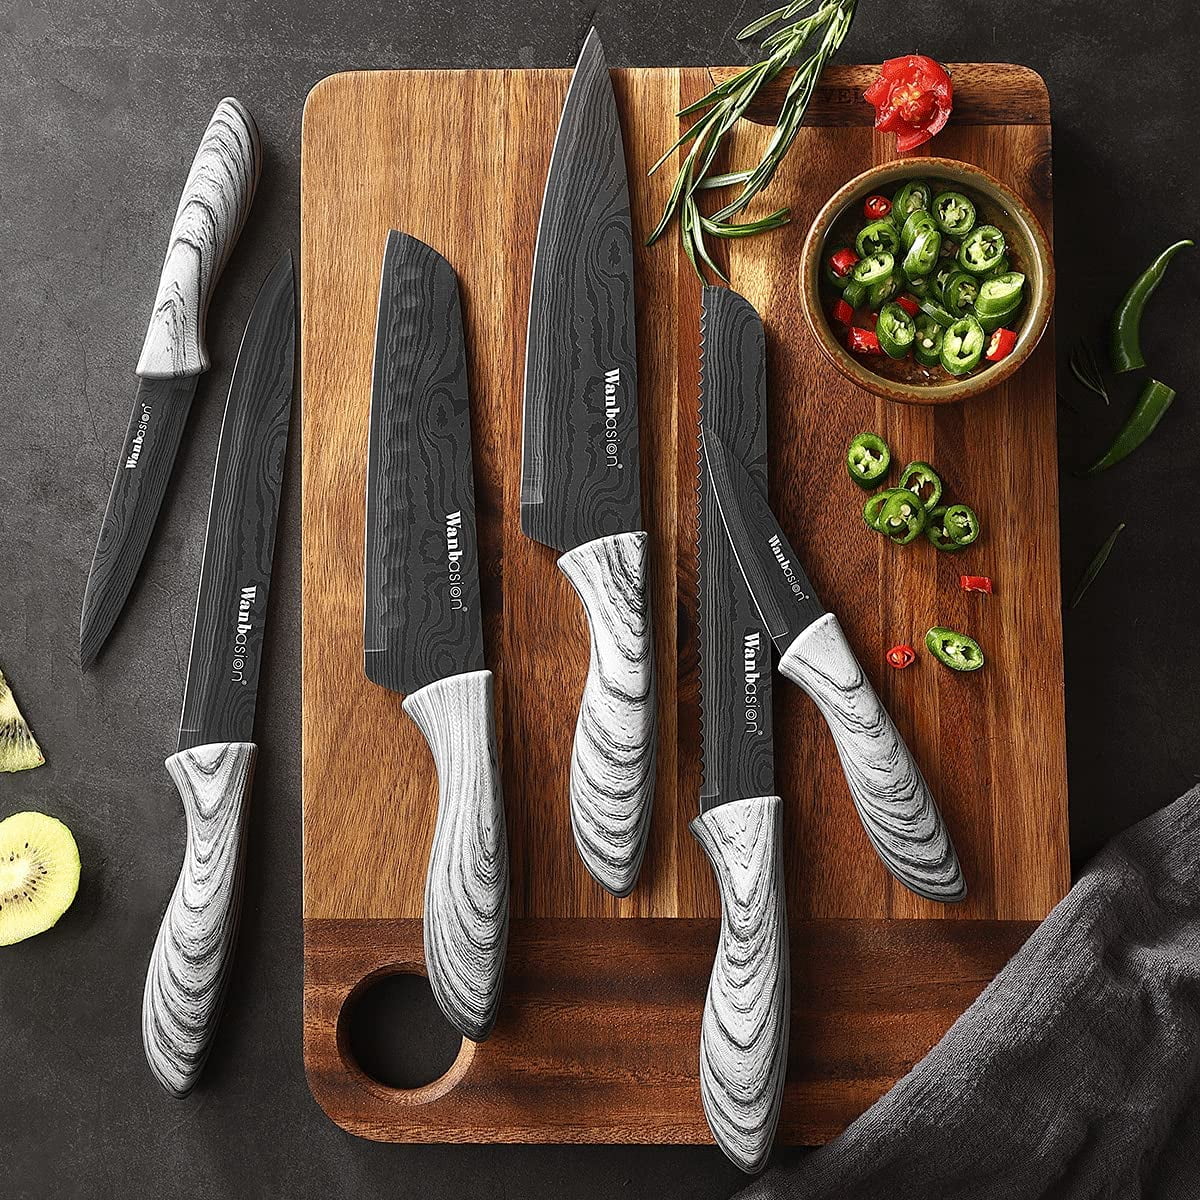 Wanbasion Black 16 Pieces Kitchen Knife Set Dishwasher Safe, Professional Chef Kitchen Knife Set, Kitchen Knife Set Stainless Steel with Knife